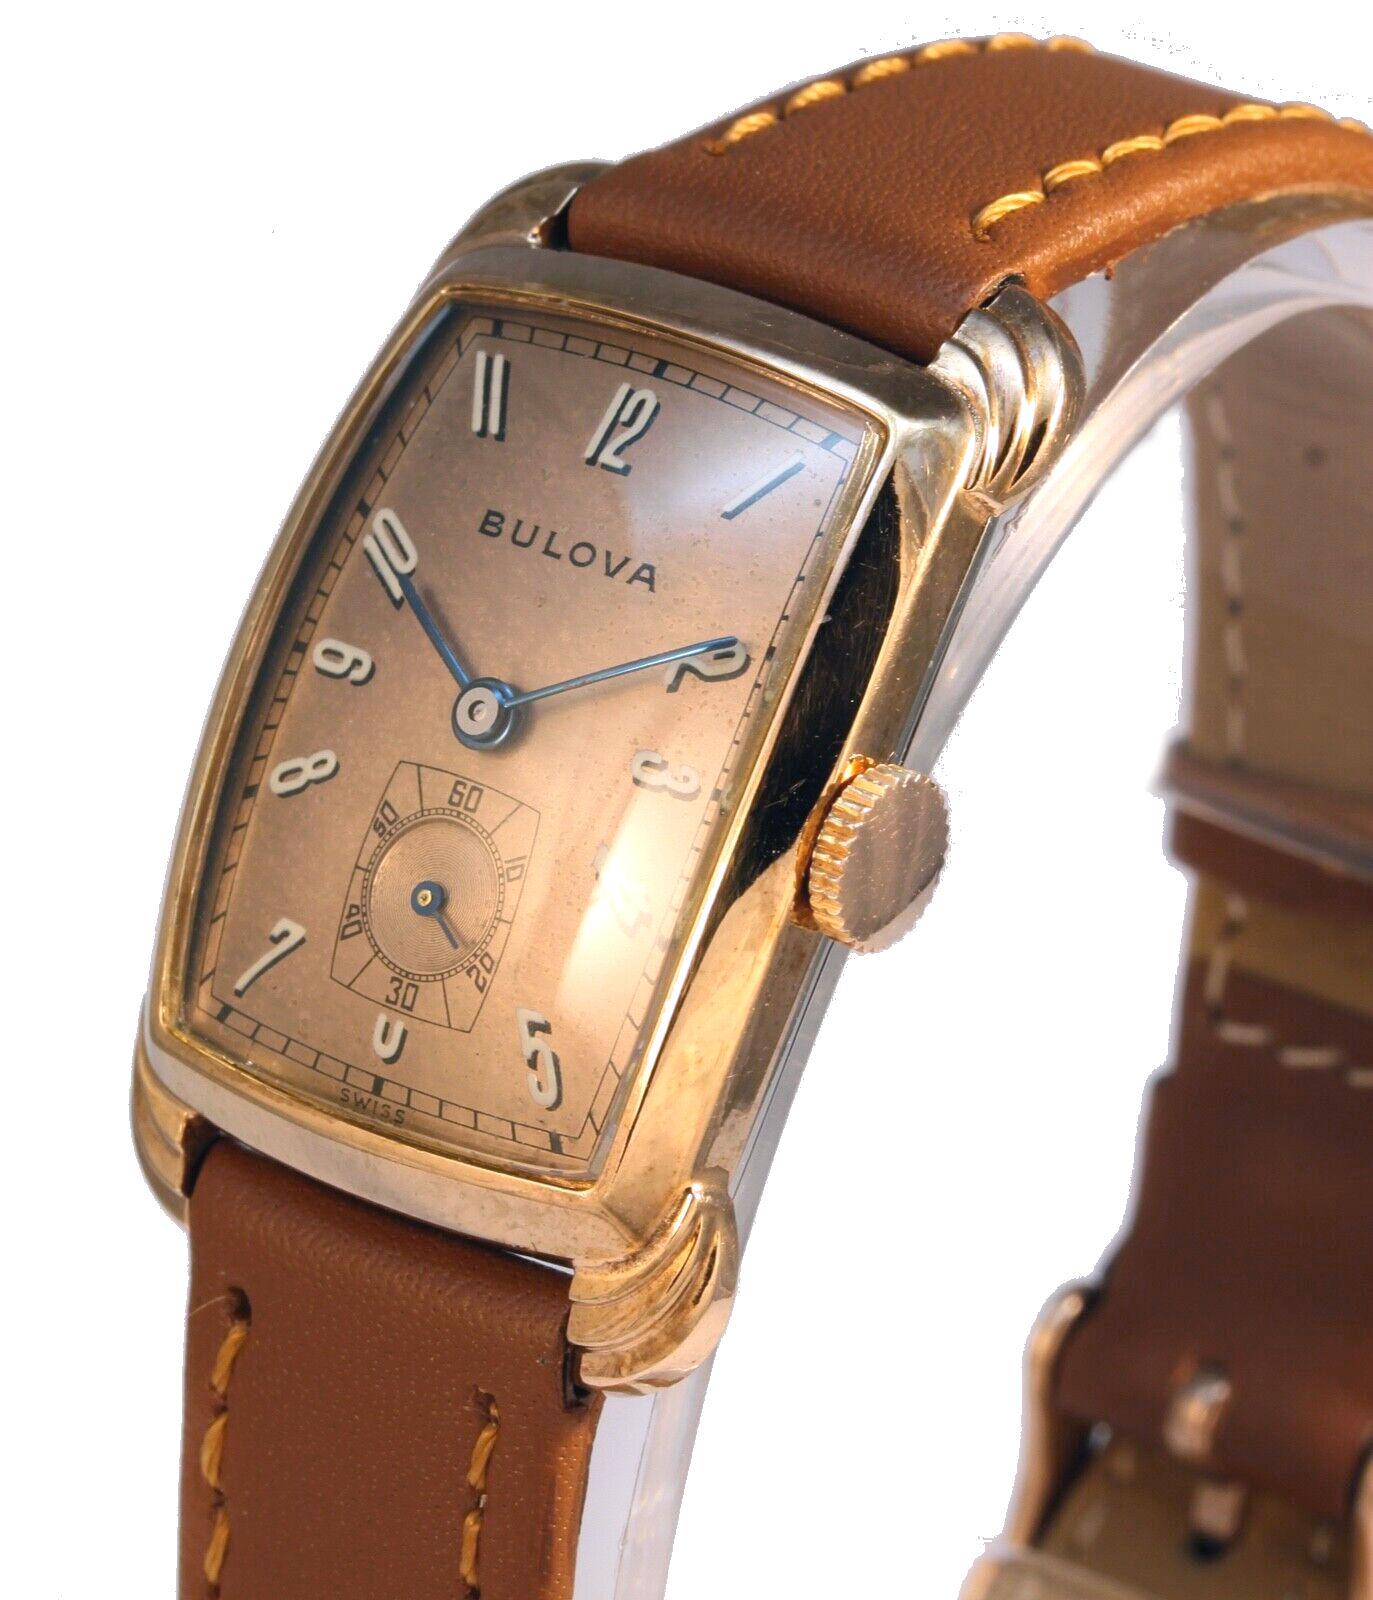 14k gold bulova watch